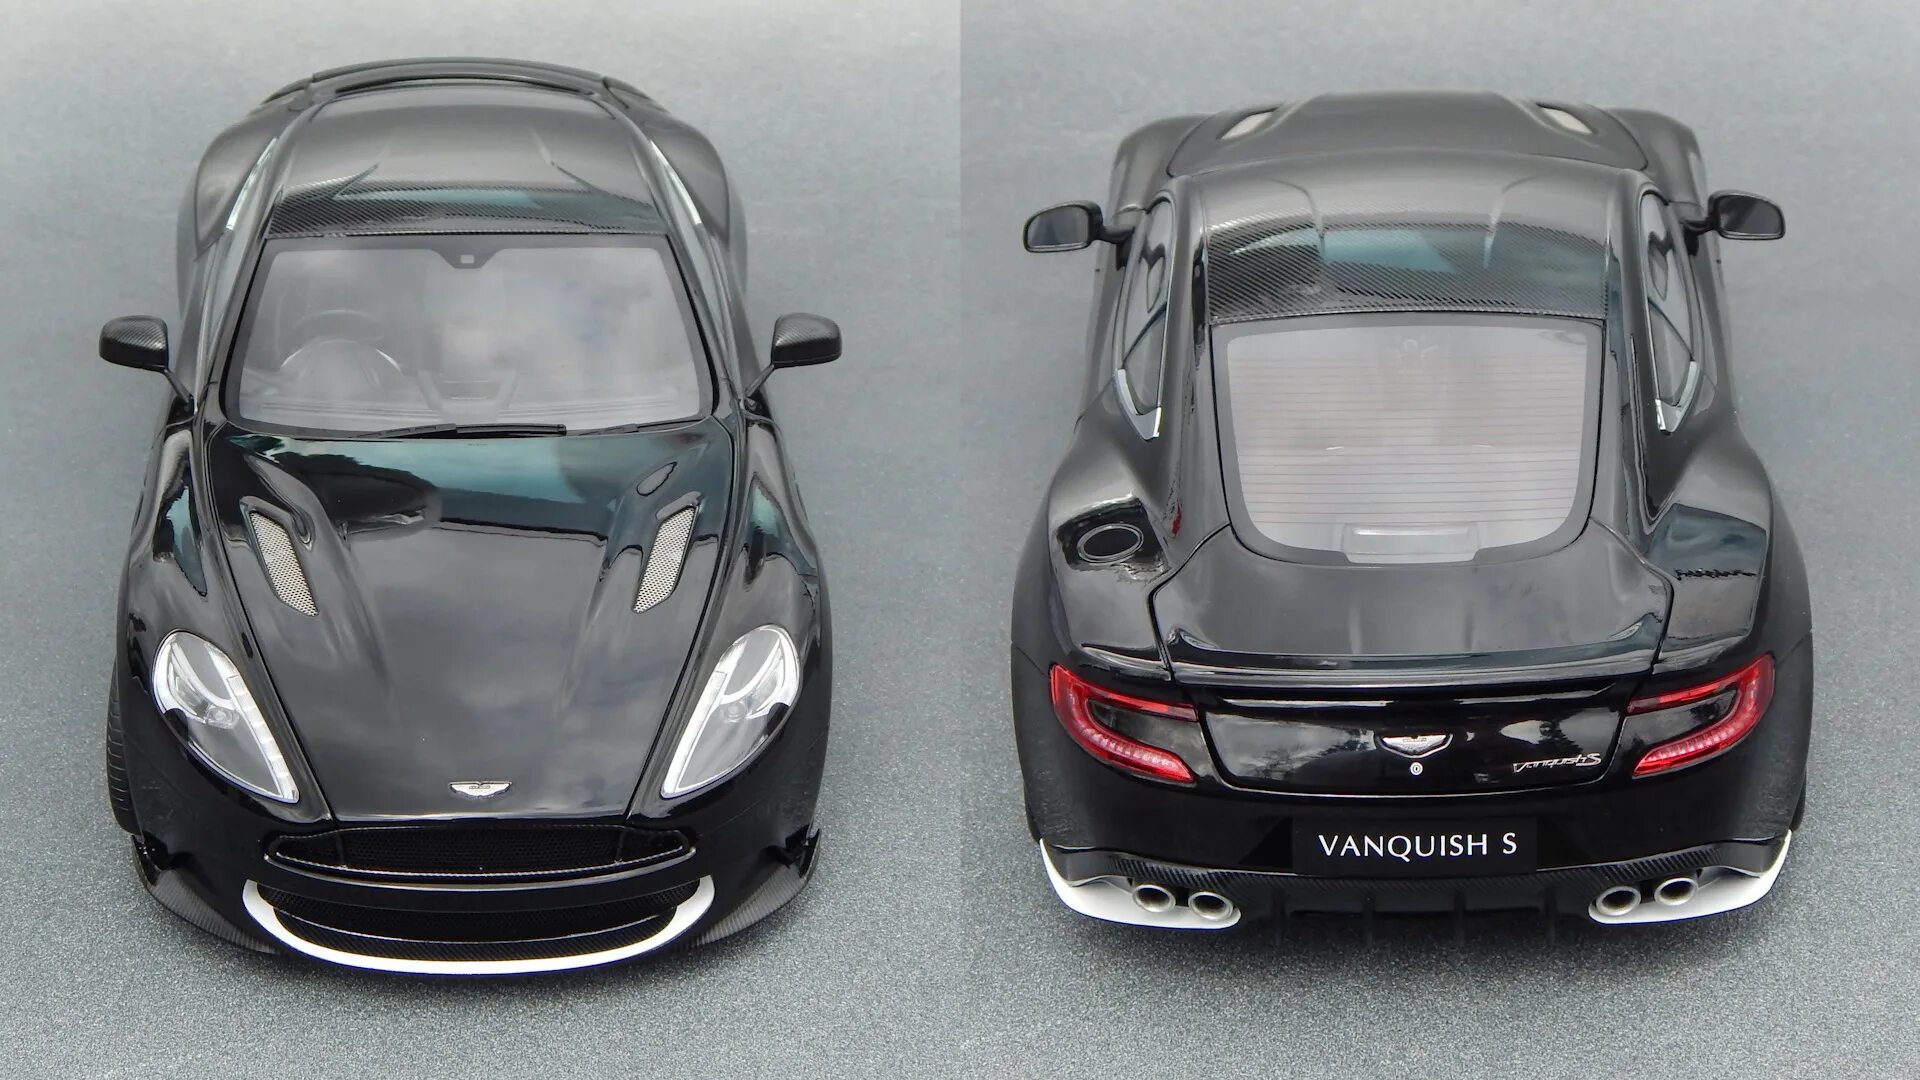 1 18 2017. AUTOART 1 18. Aston Martin Vantage v12 gt3 1/18 AUTOART. Aston Martin DBS Superleggera AUTOART 1 18. Mercedes-AMG gt s AUTOART 1:18.